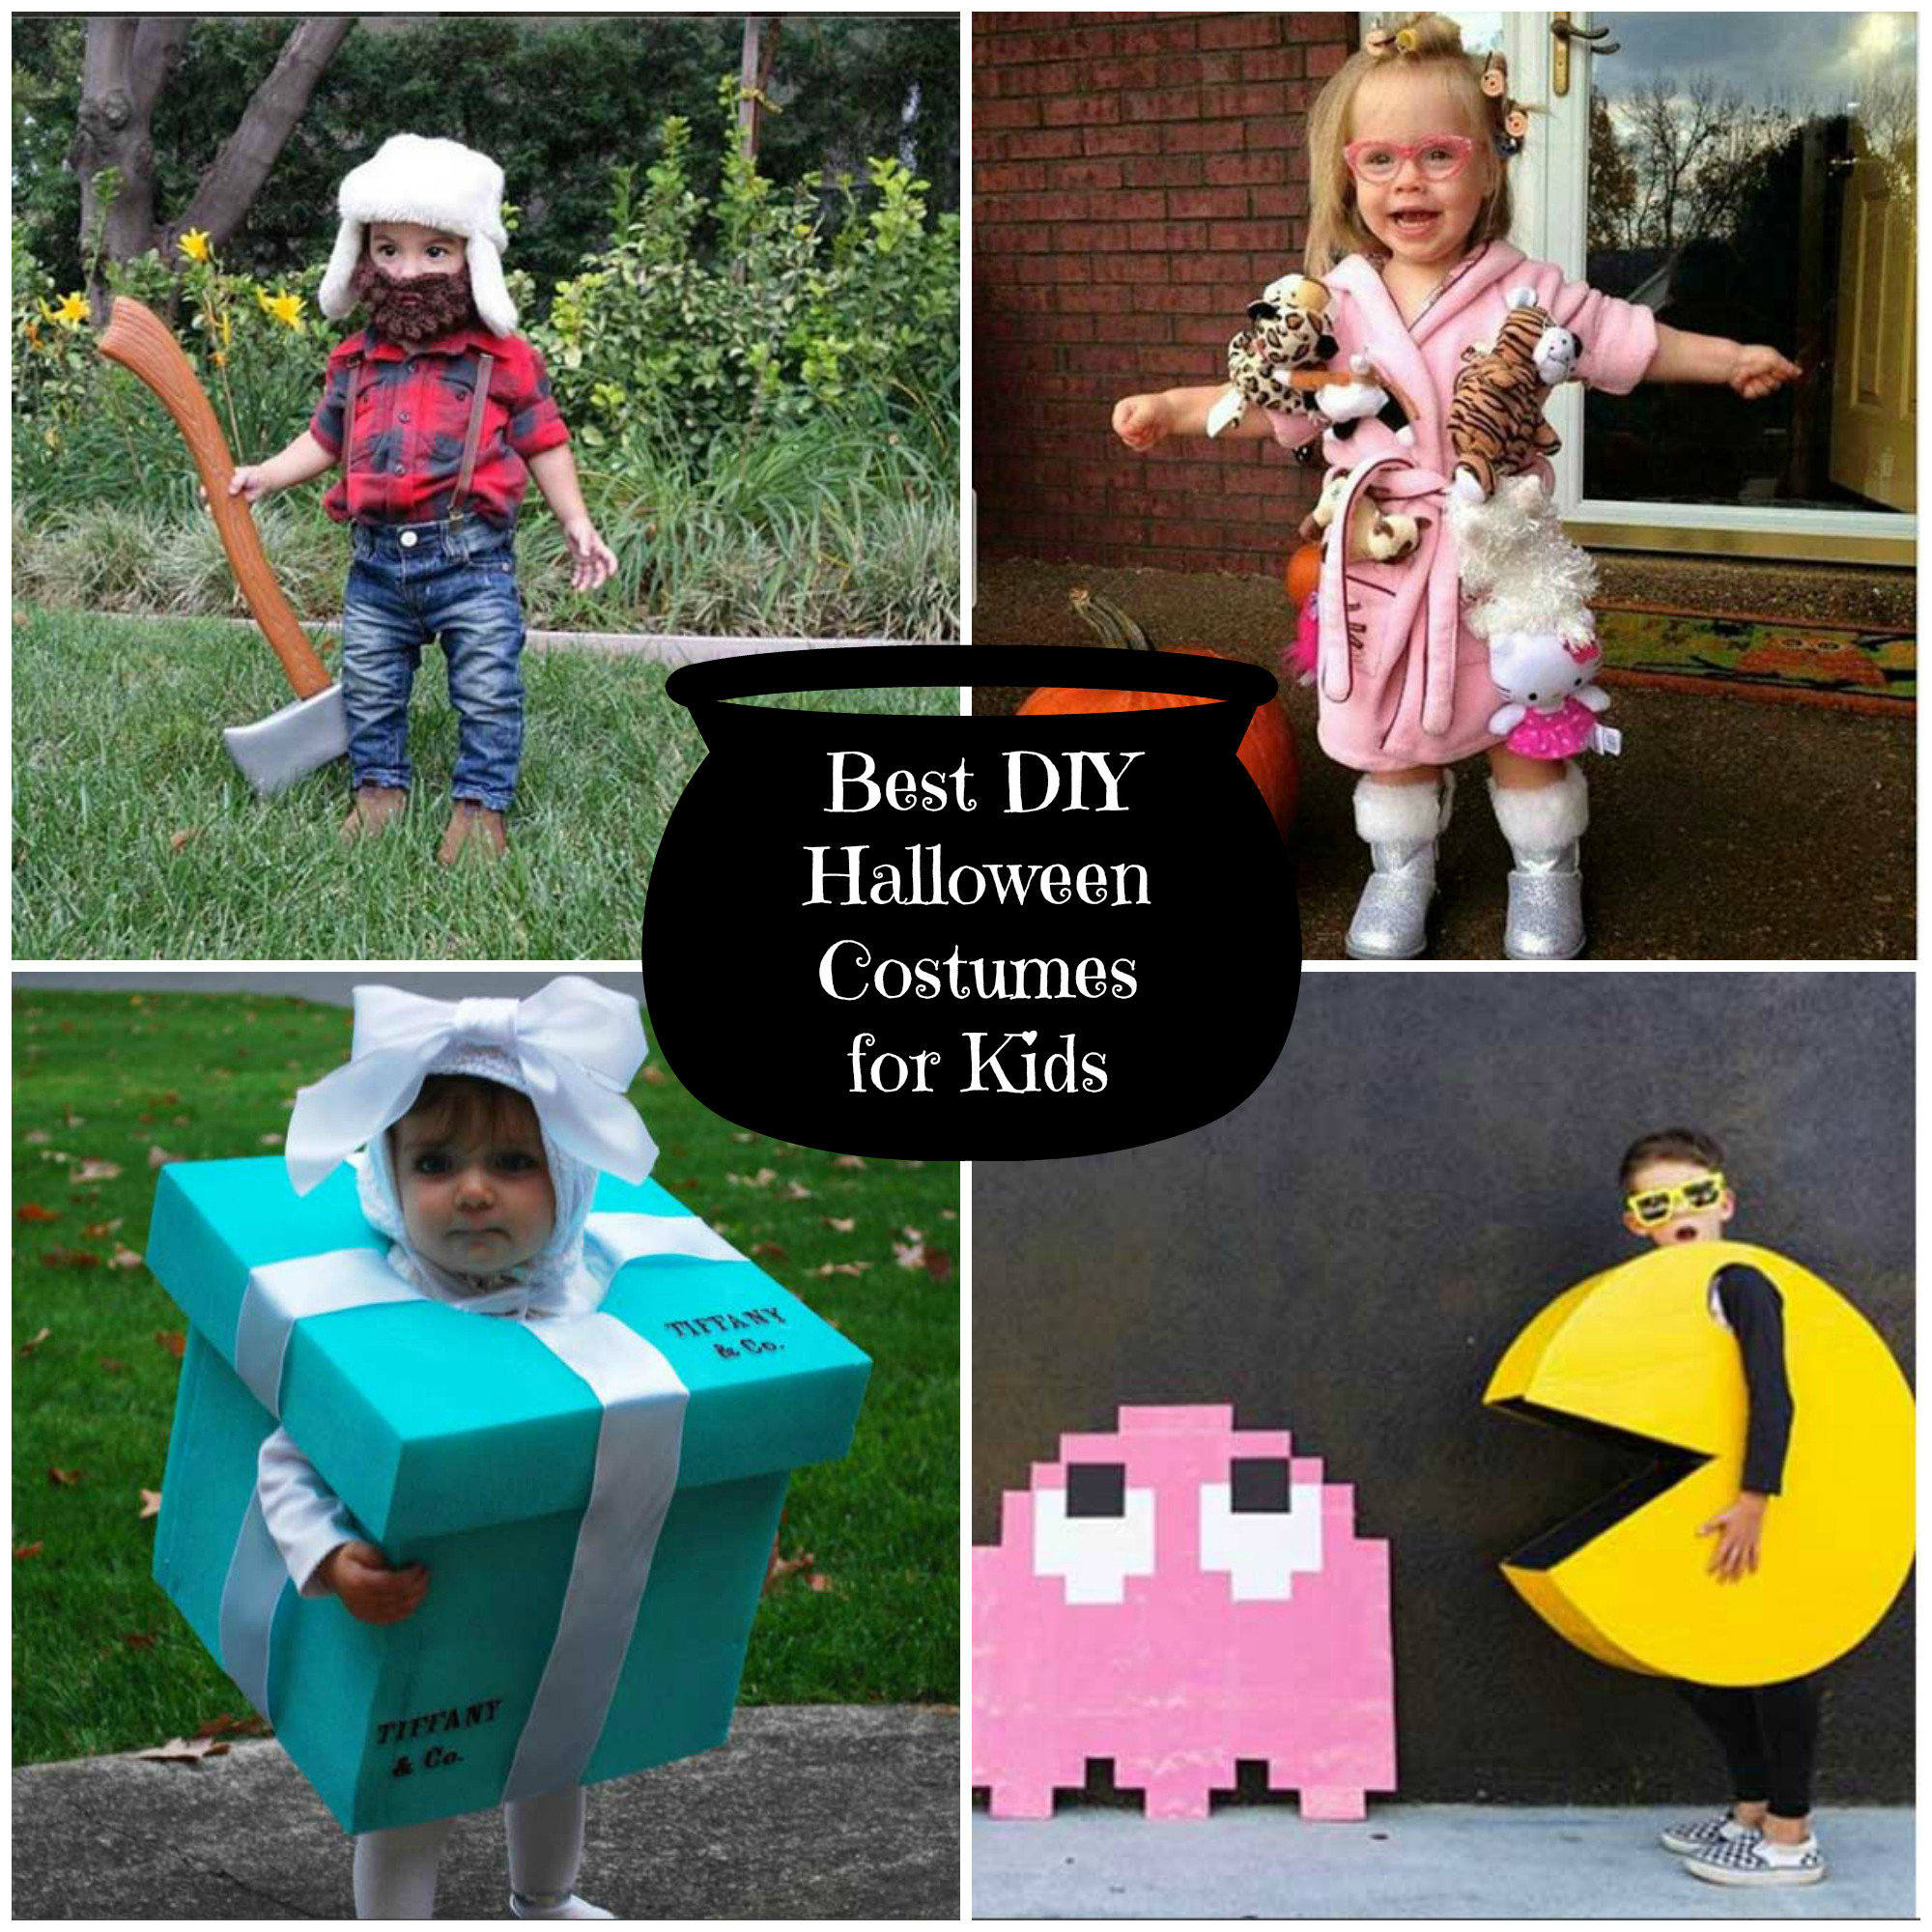 Best ideas about Best DIY Halloween Costumes
. Save or Pin Best DIY Halloween Costumes for Kids Sometimes Homemade Now.